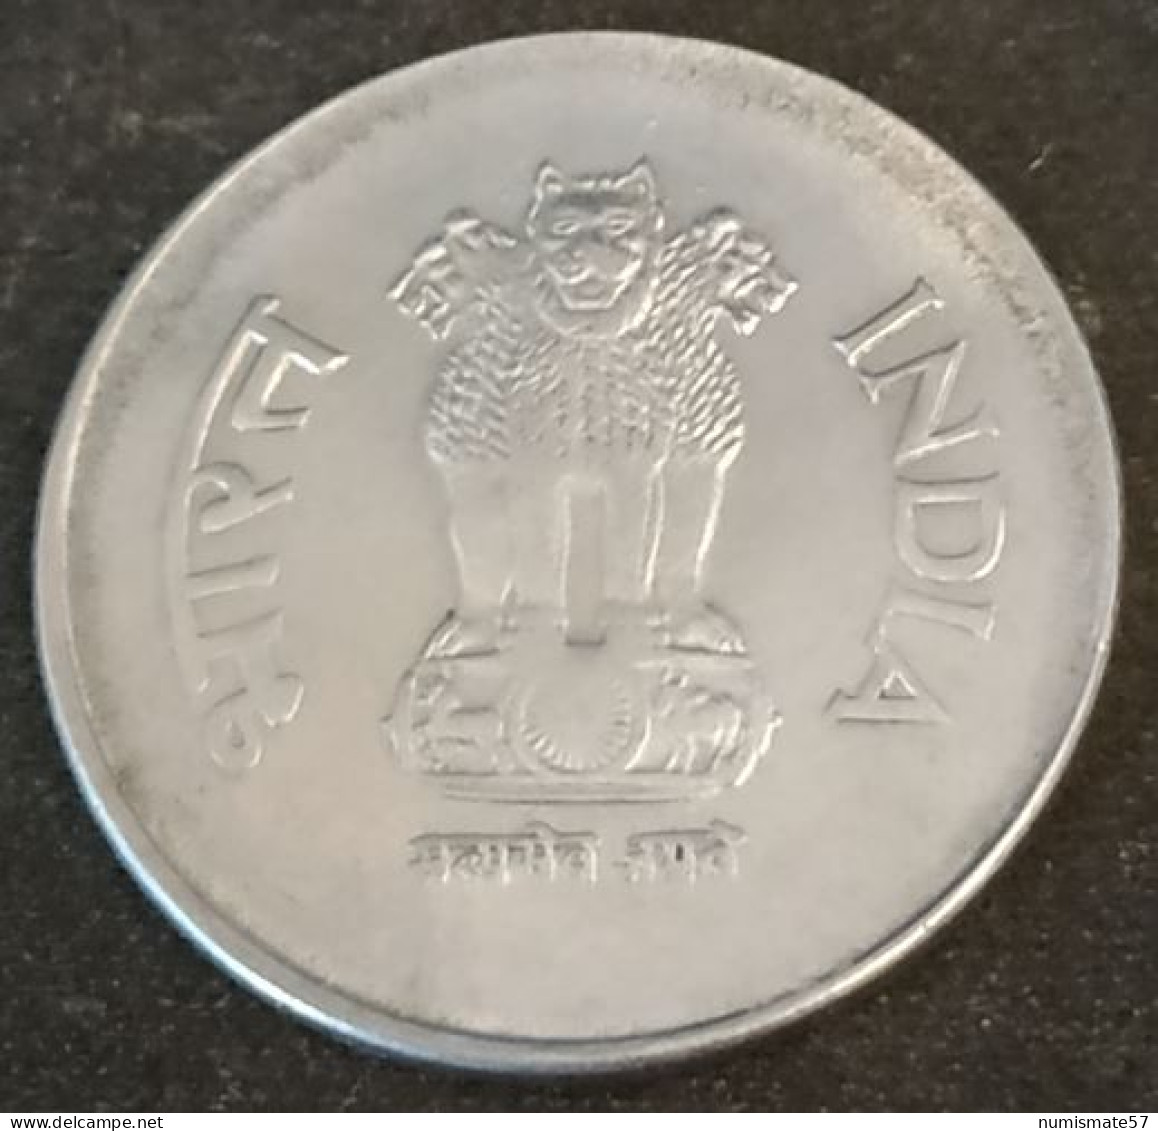 INDE - INDIA - 1 RUPEE 2003 * - KM 92.2 - ( Hyderabad ) - Inde